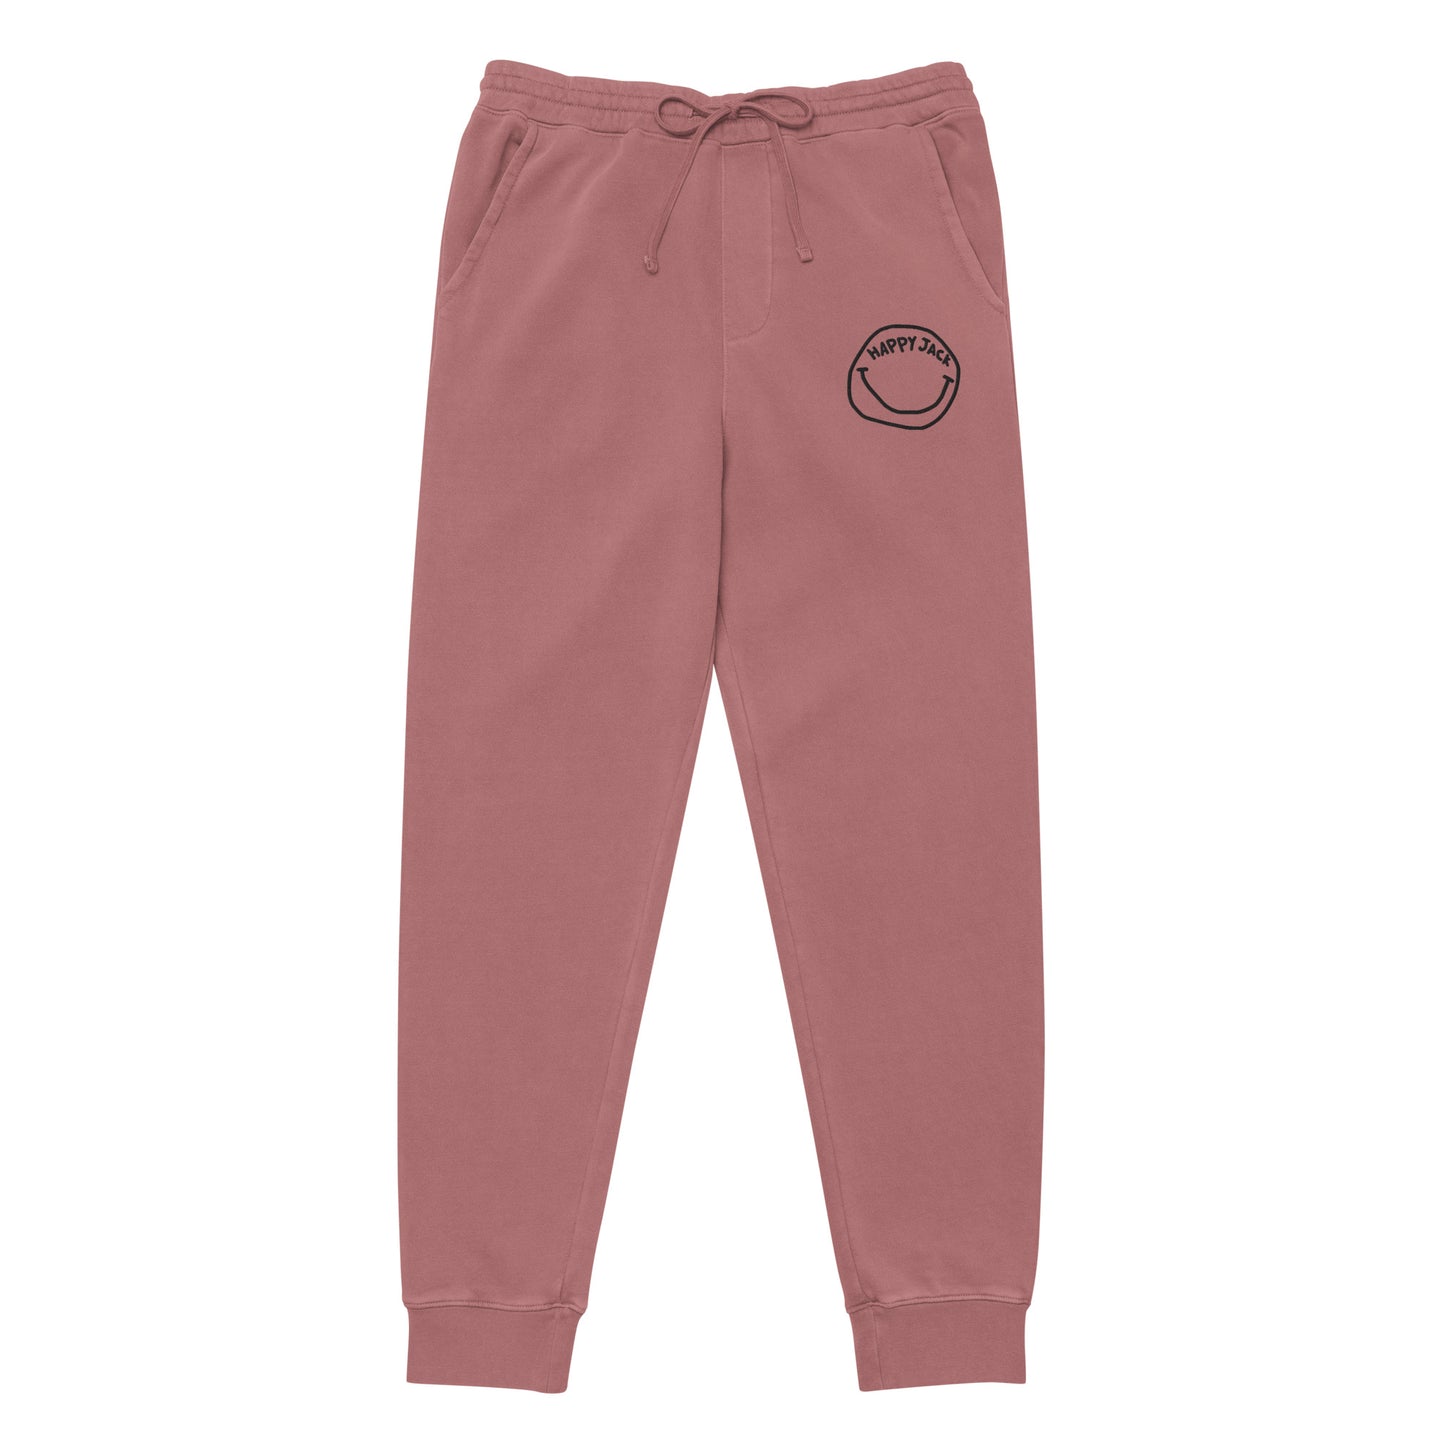 Unisex Pink Lifestyle Joggers & Sweatpants.